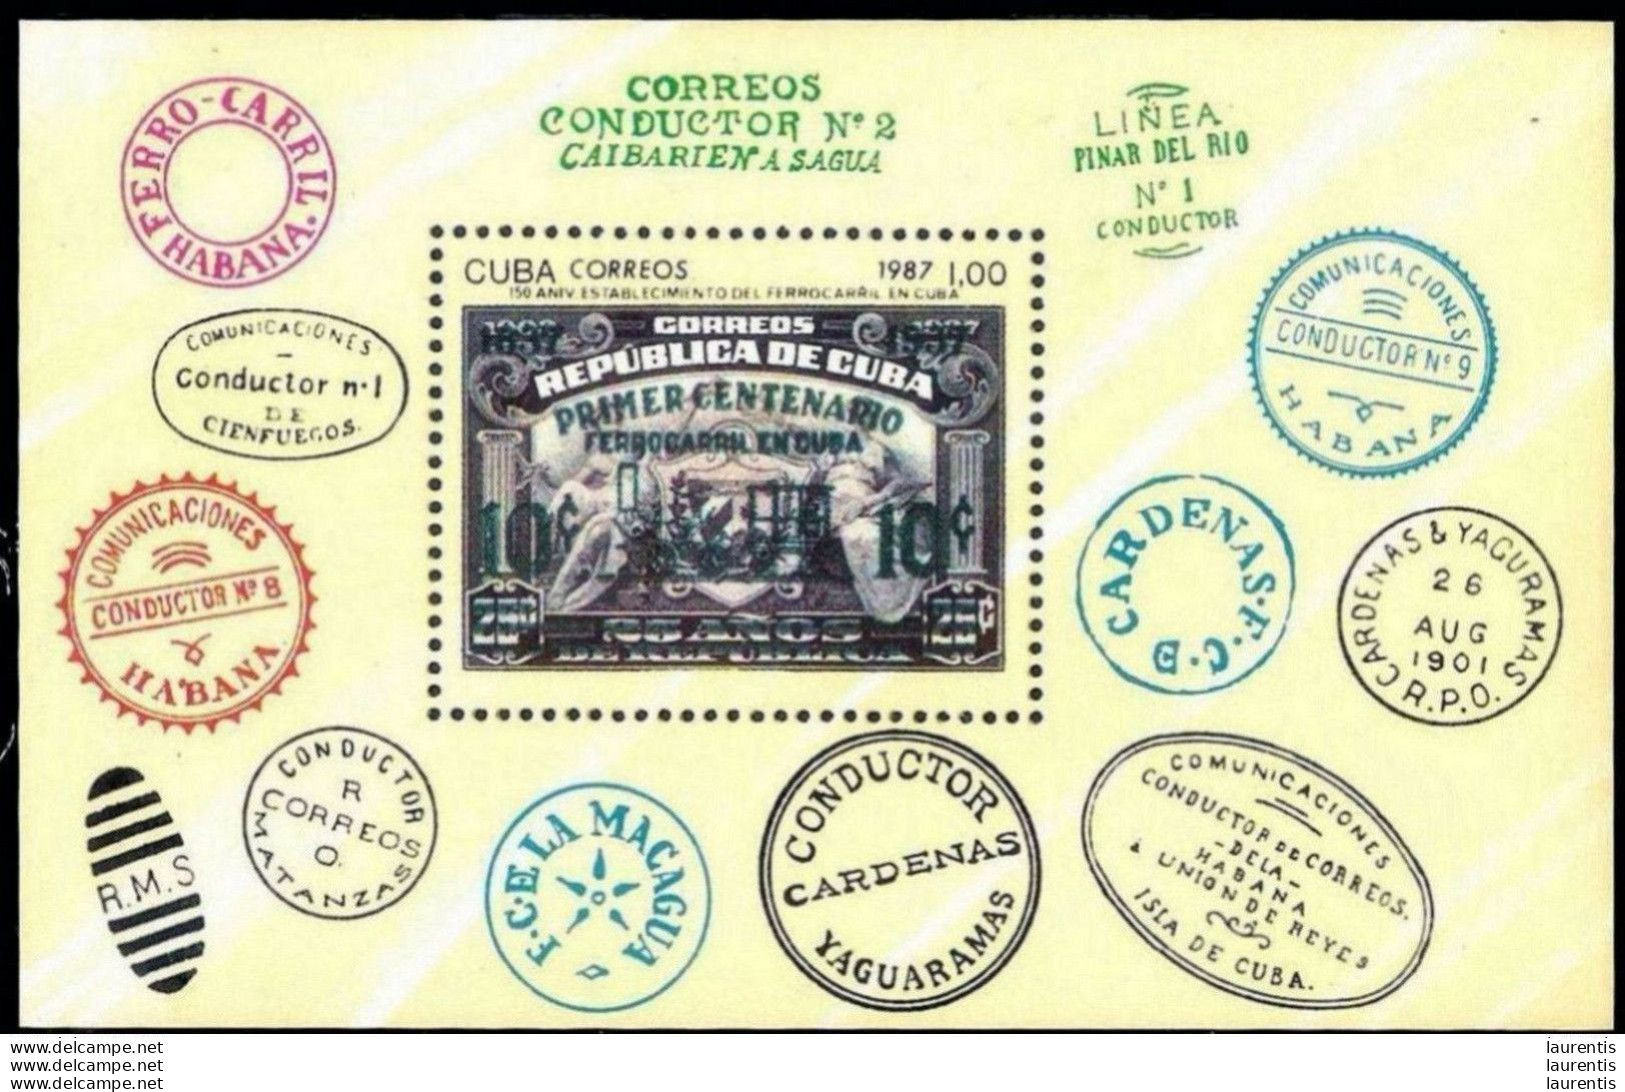 668  Stamp On Stamp - Postal History - Railroad Mail Service Handstamps - Philatelie - B110 - 1987 - MNH - Cb - 1,95 (6) - Stamps On Stamps